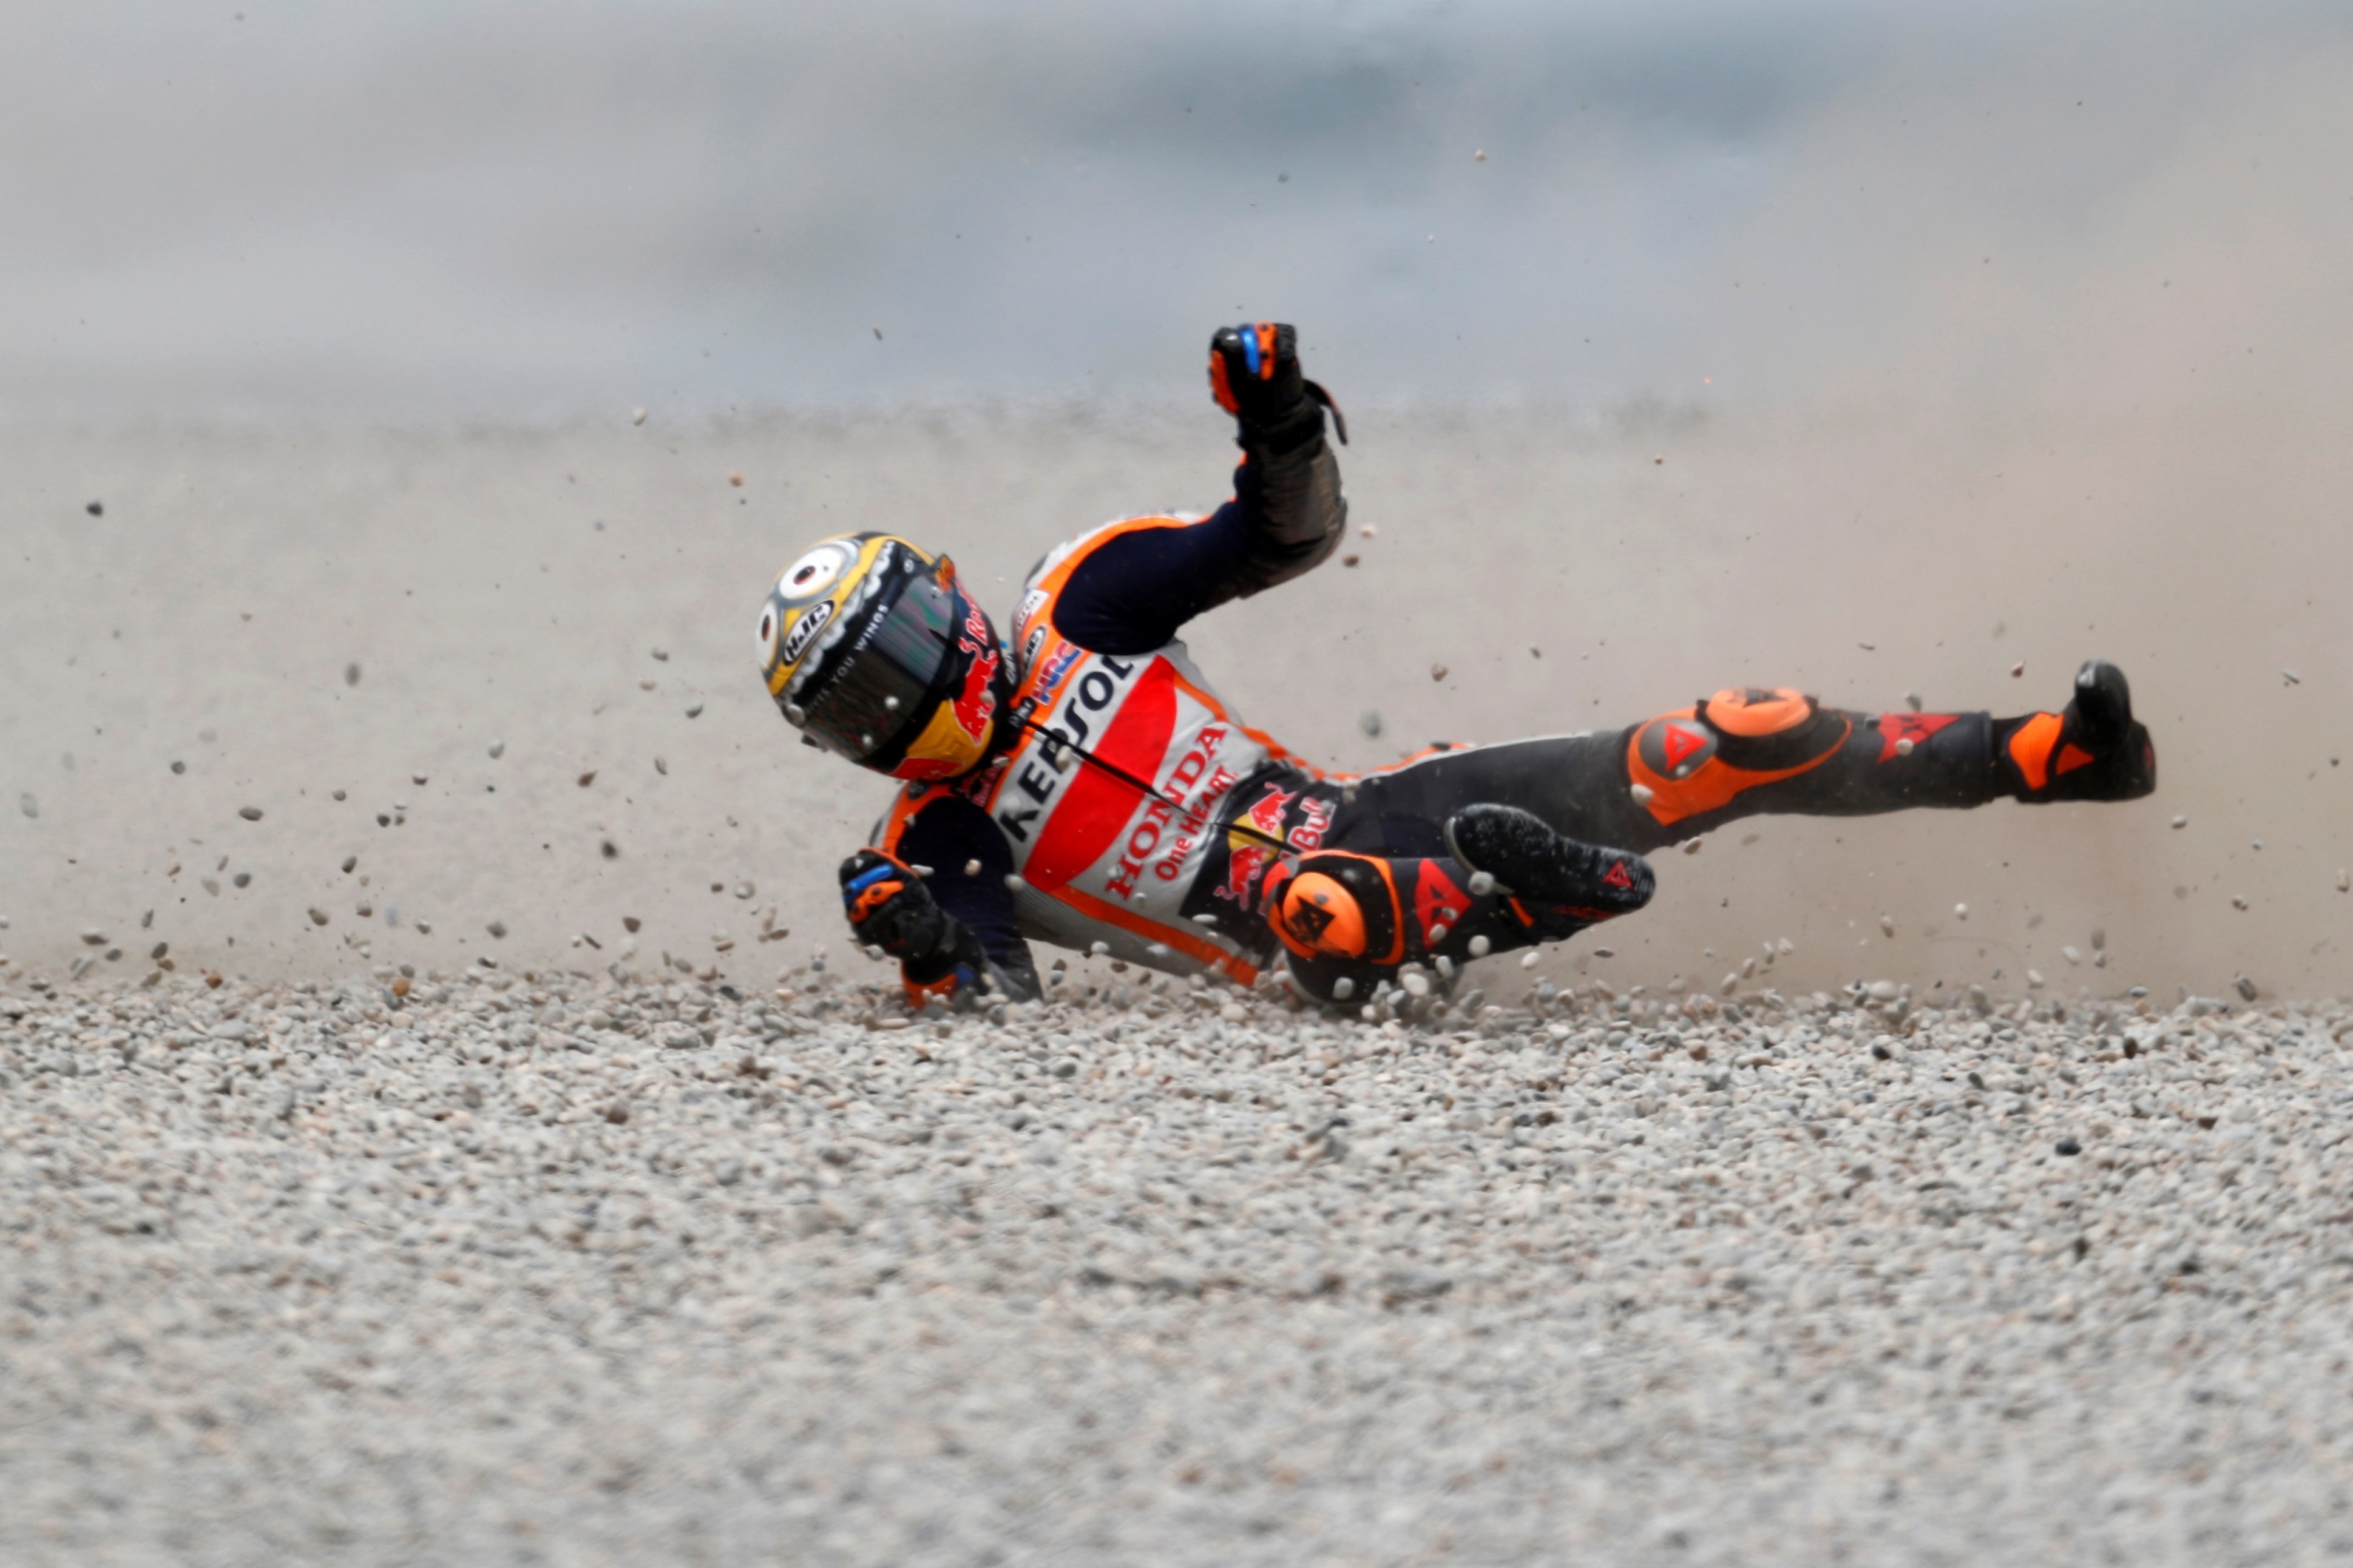 Esfereïdora caiguda de Pol Espargaró a dos dies de començar el Mundial de MotoGP